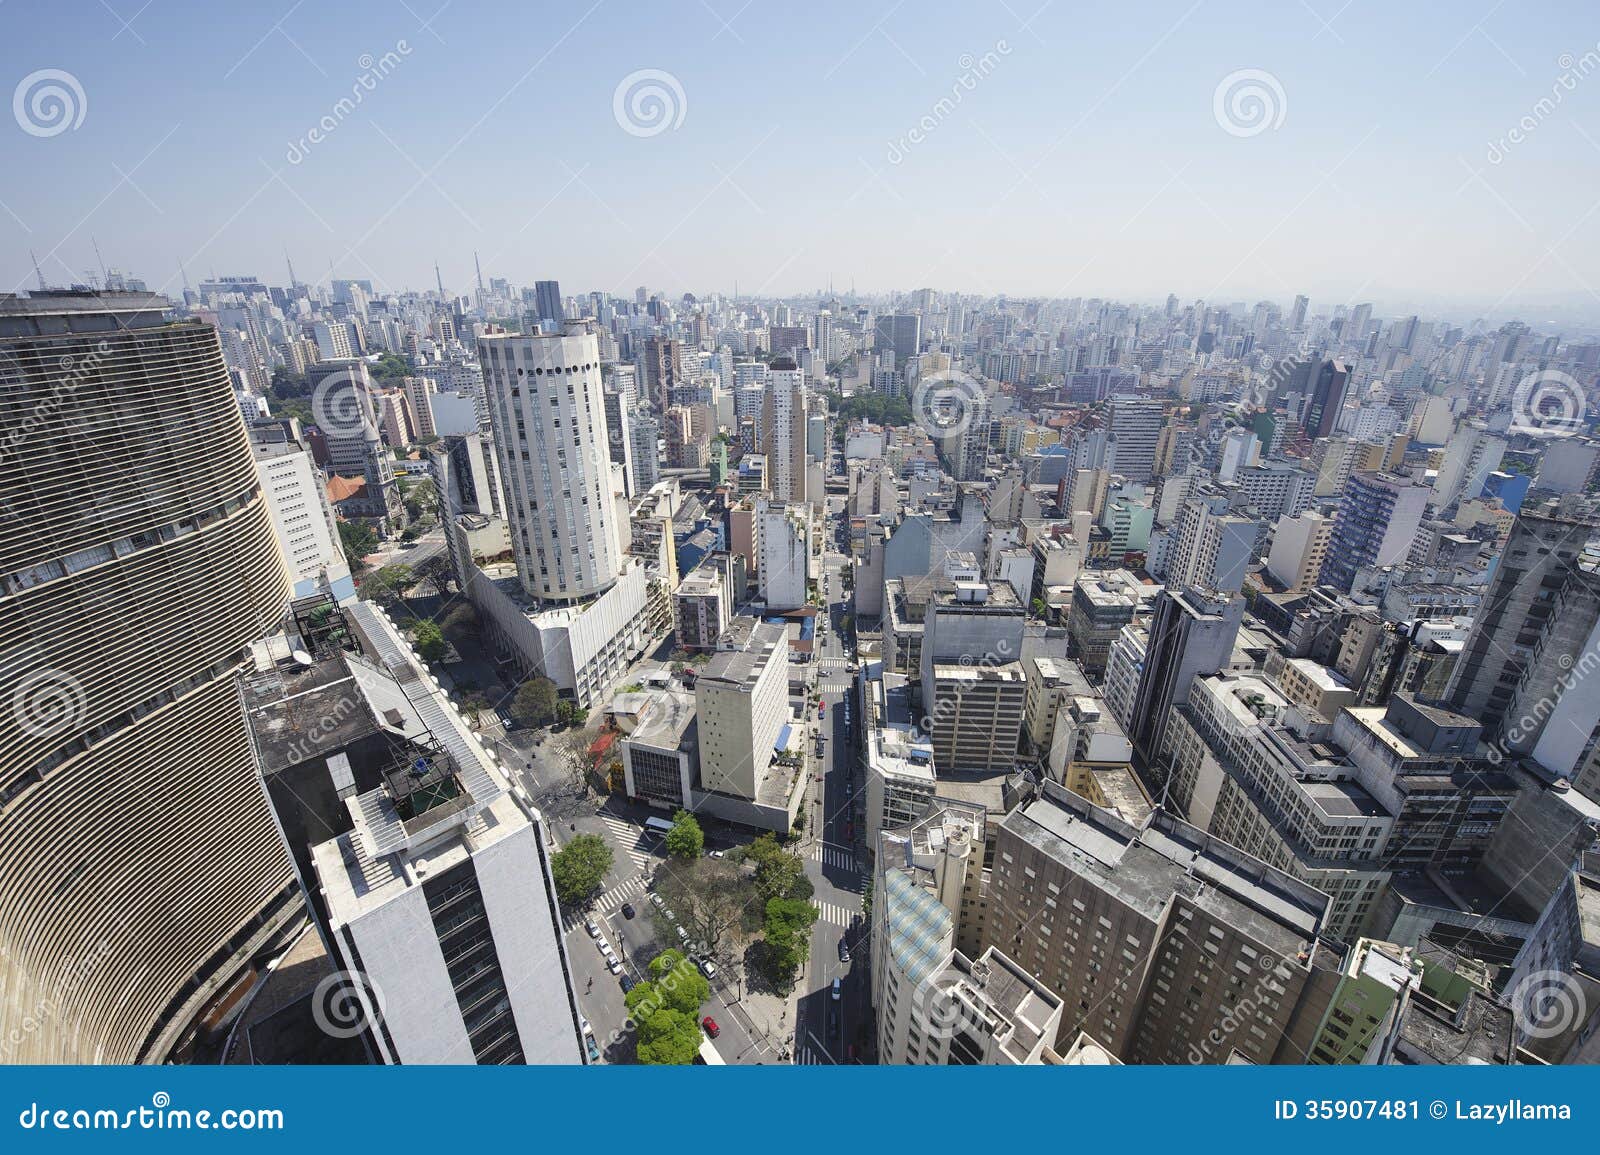 sao paulo brazil skyline architecture landmarks